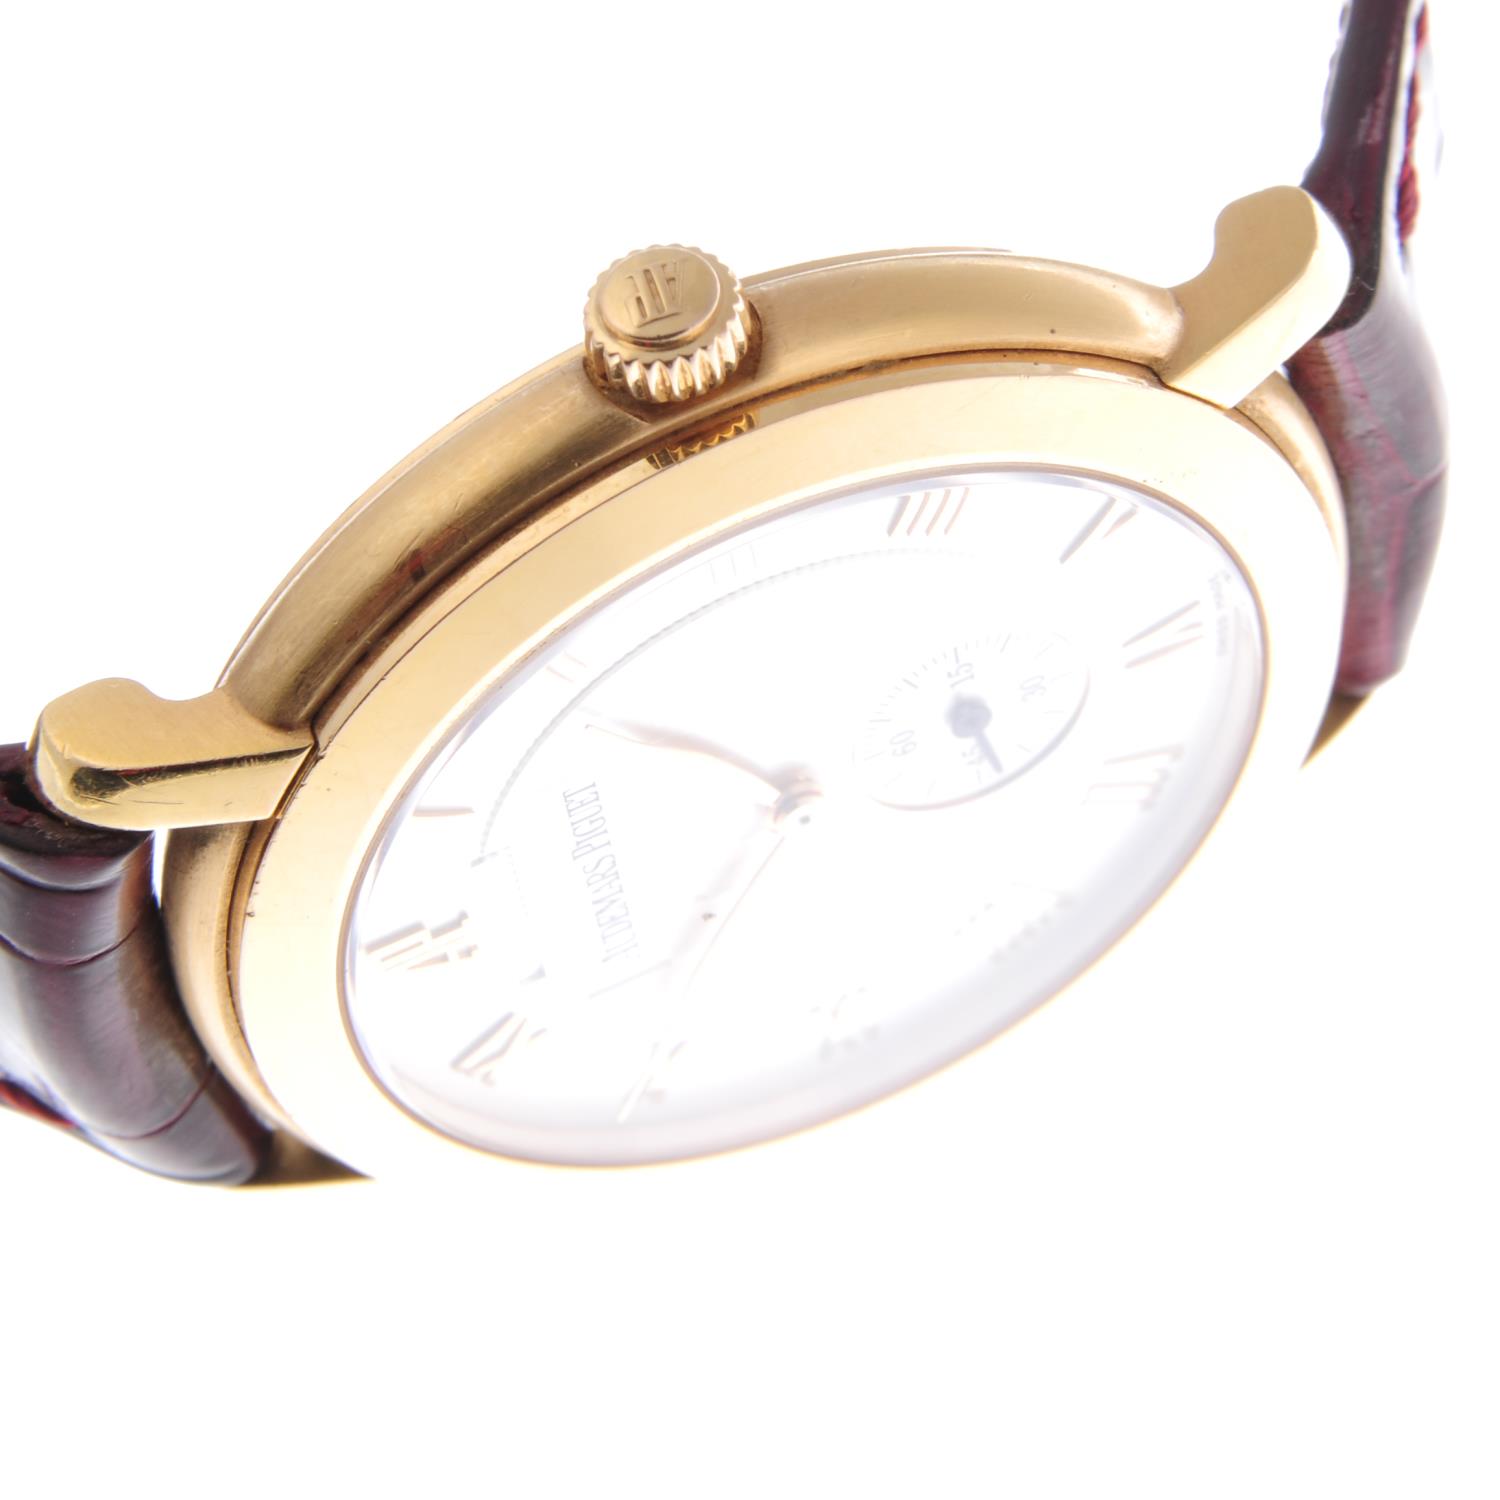 AUDEMARS PIGUET - a gentleman's Jules Audemars wrist watch. 18ct yellow gold case with exhibition - Image 5 of 5